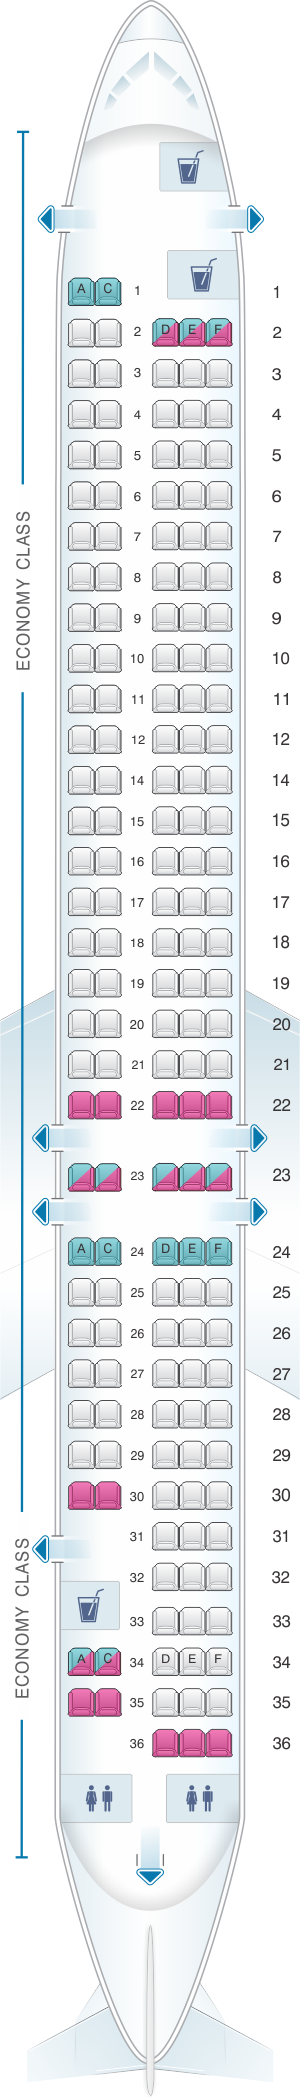 Md 82 Aircraft Seating Chart